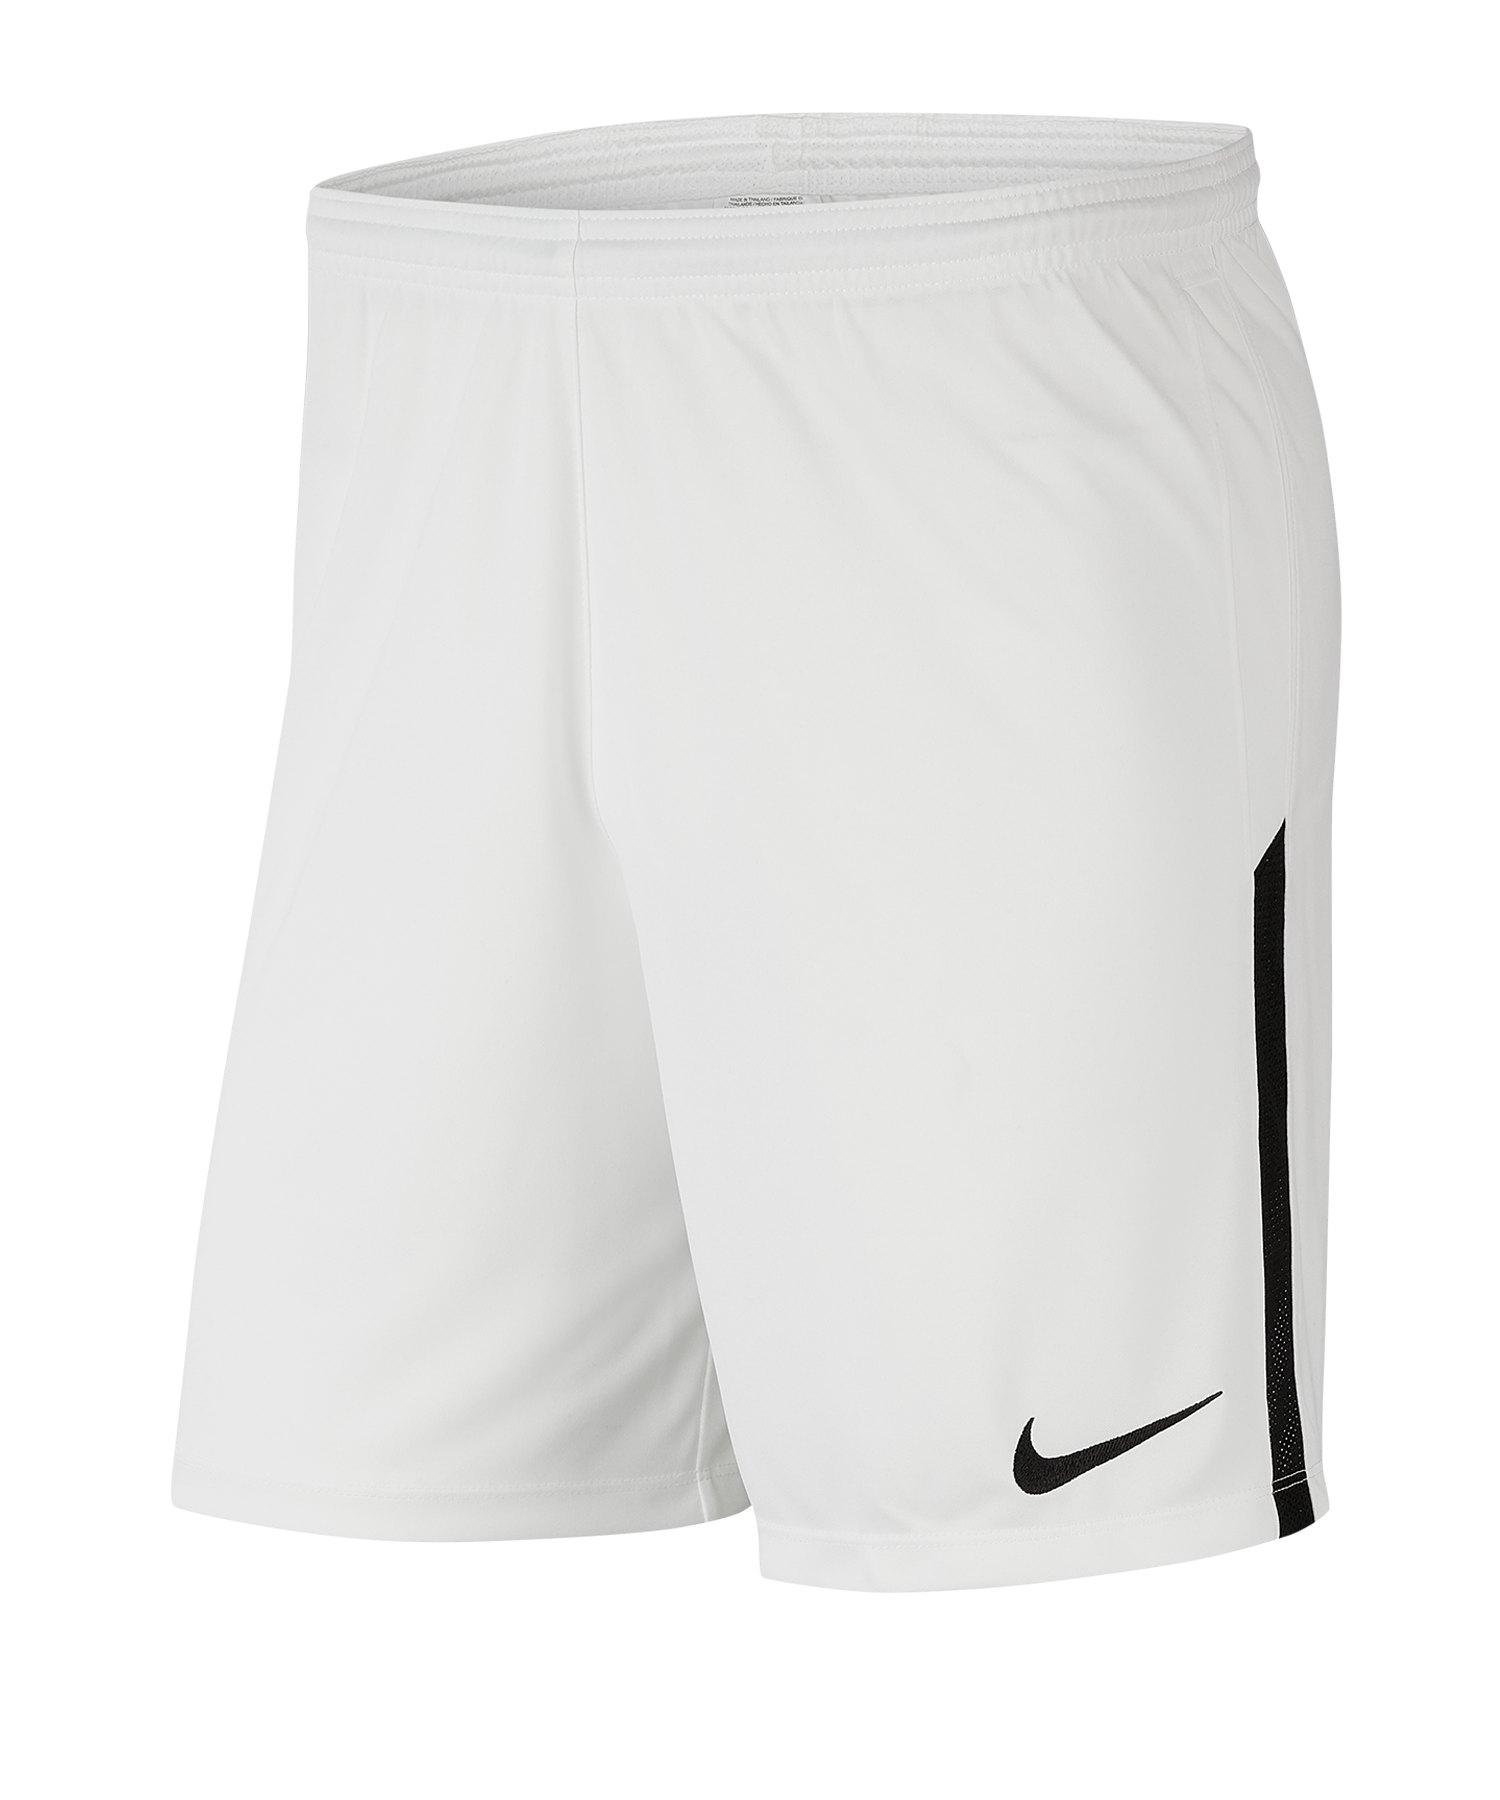 Nike League Knit II Short Weiss F100 - weiss